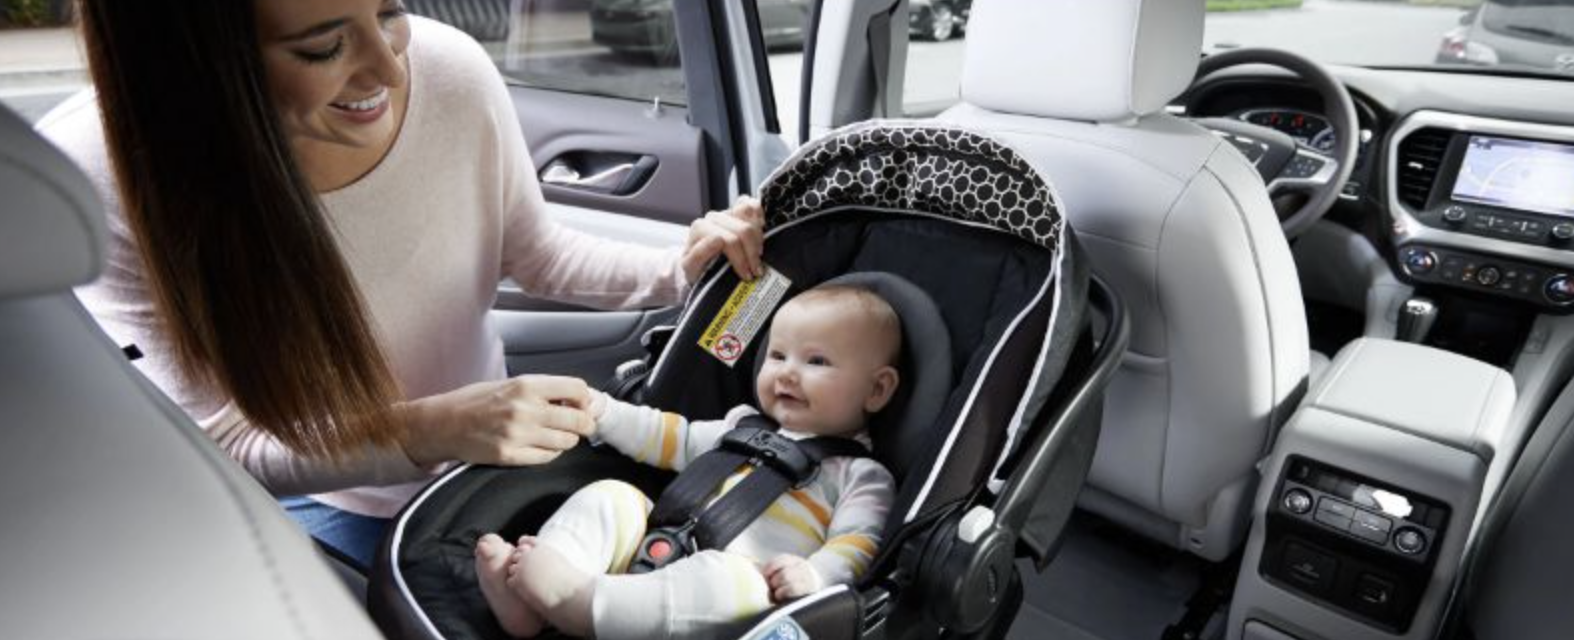 The Graco SnugRide Infant Car Seat